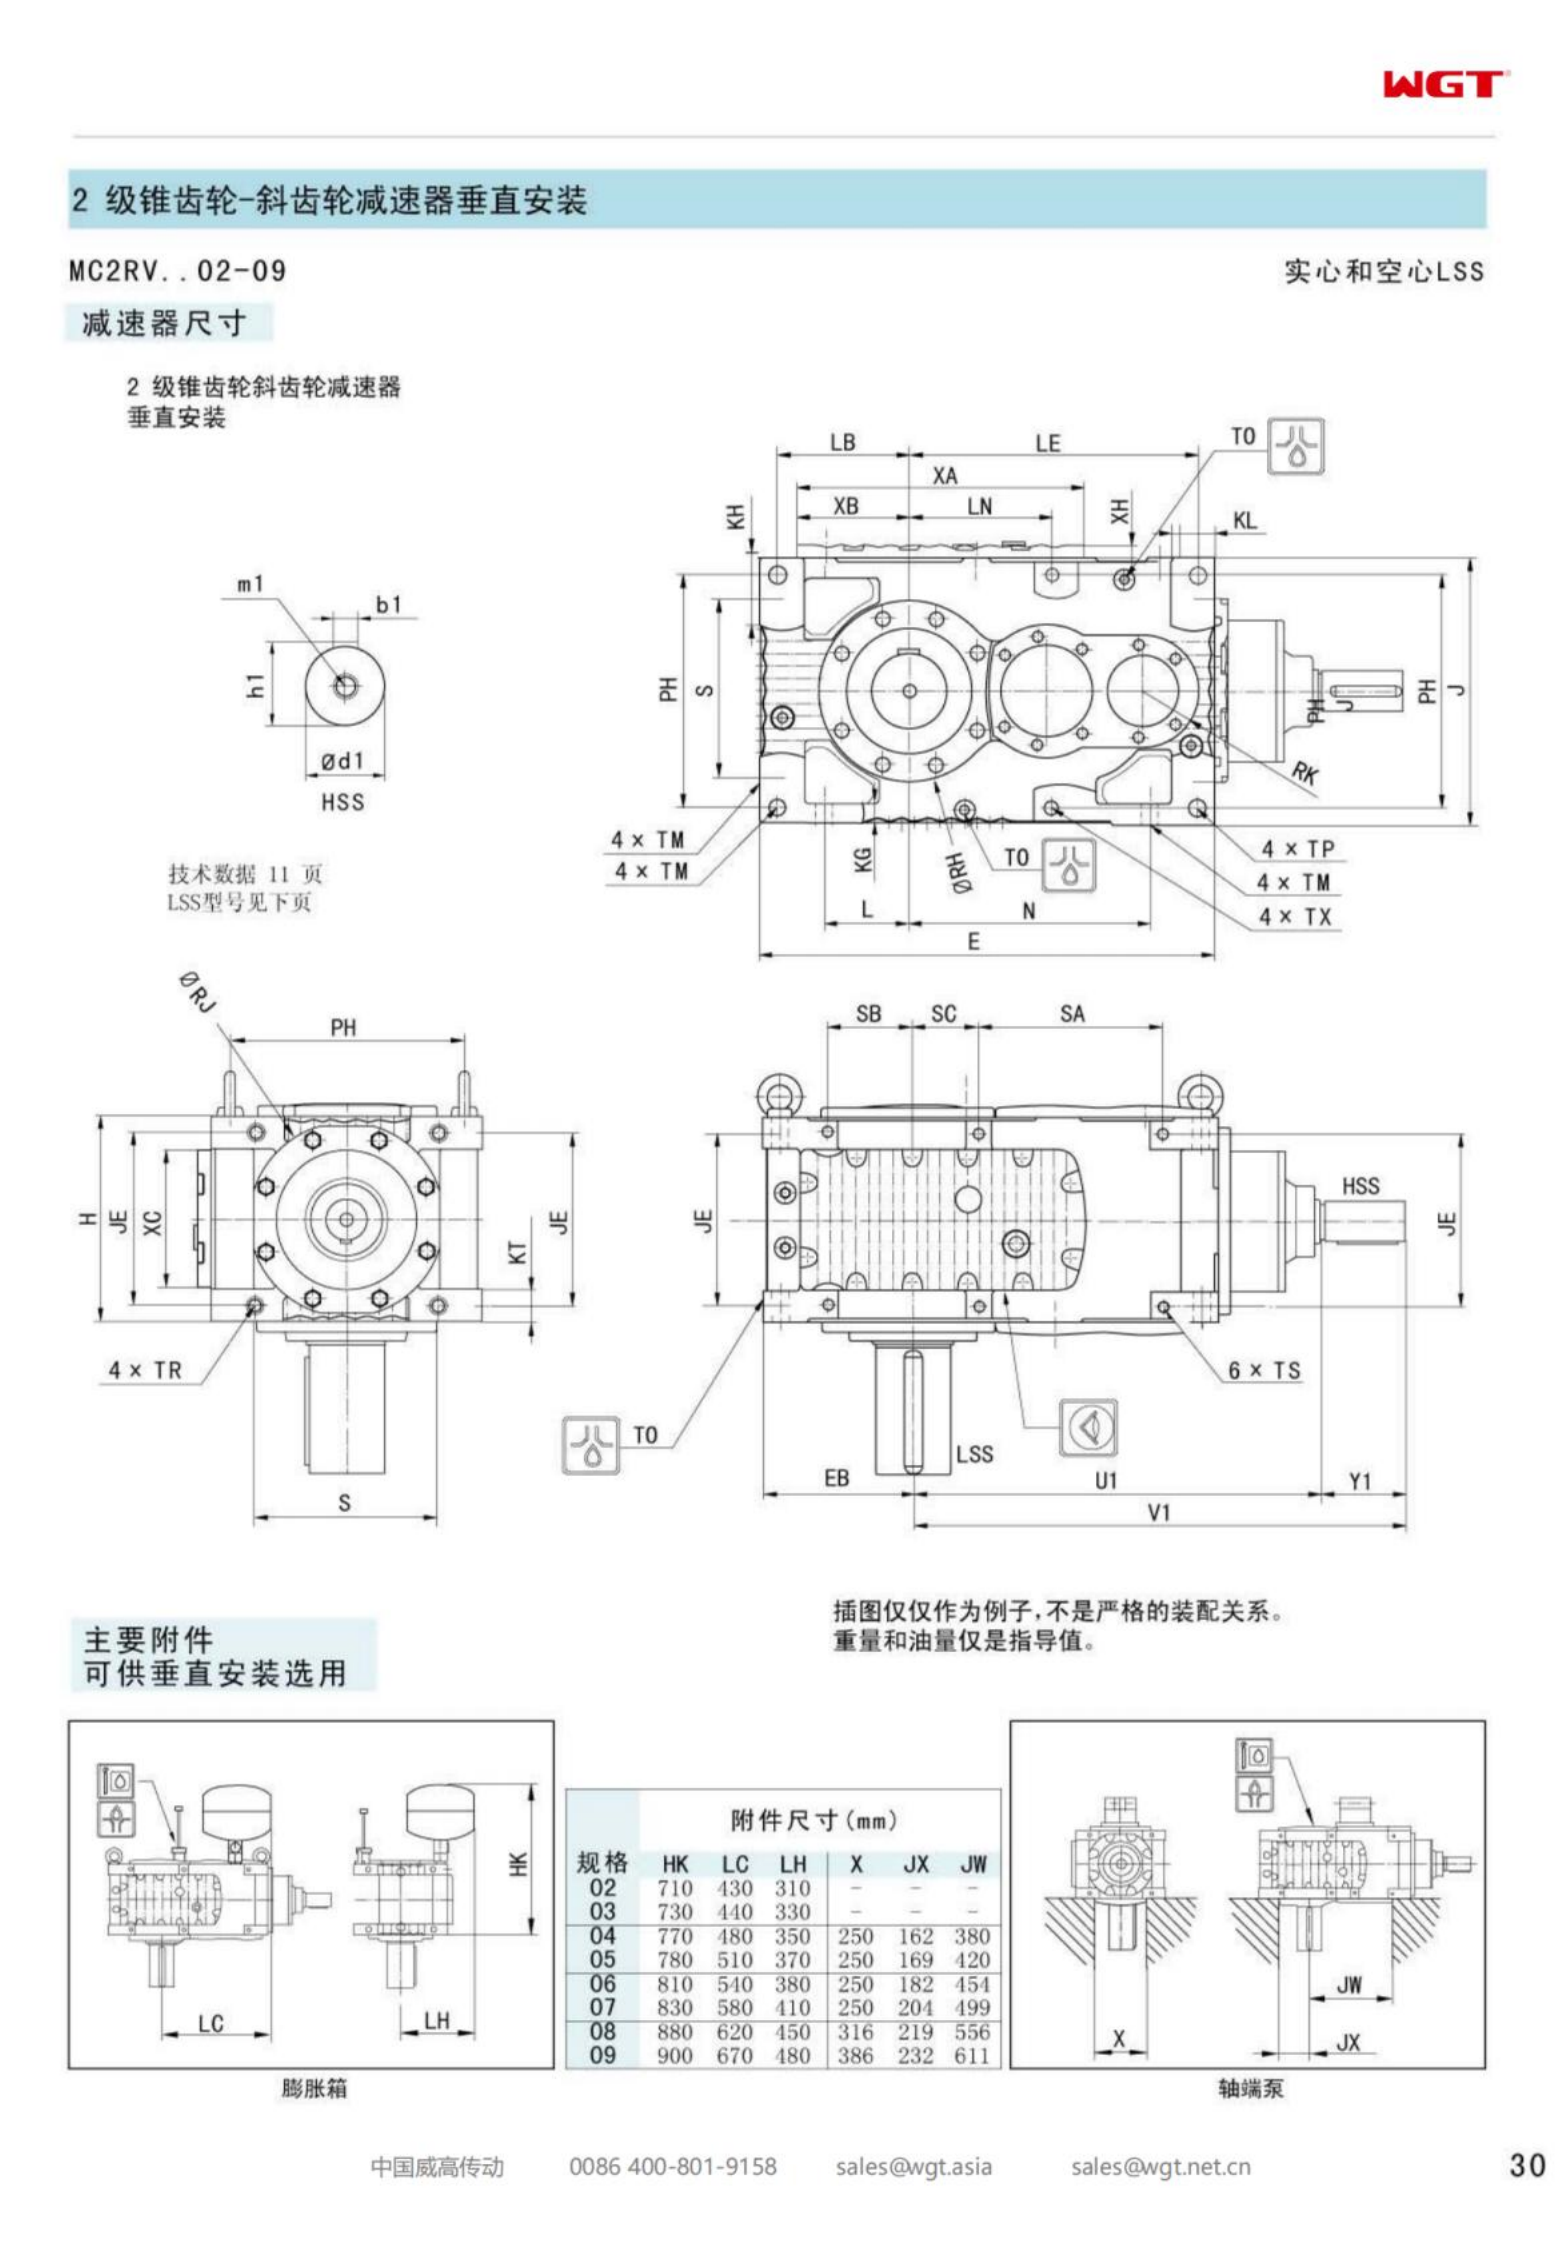 MC2RVST08 replaces _SEW_MC_Series gearbox (patent)